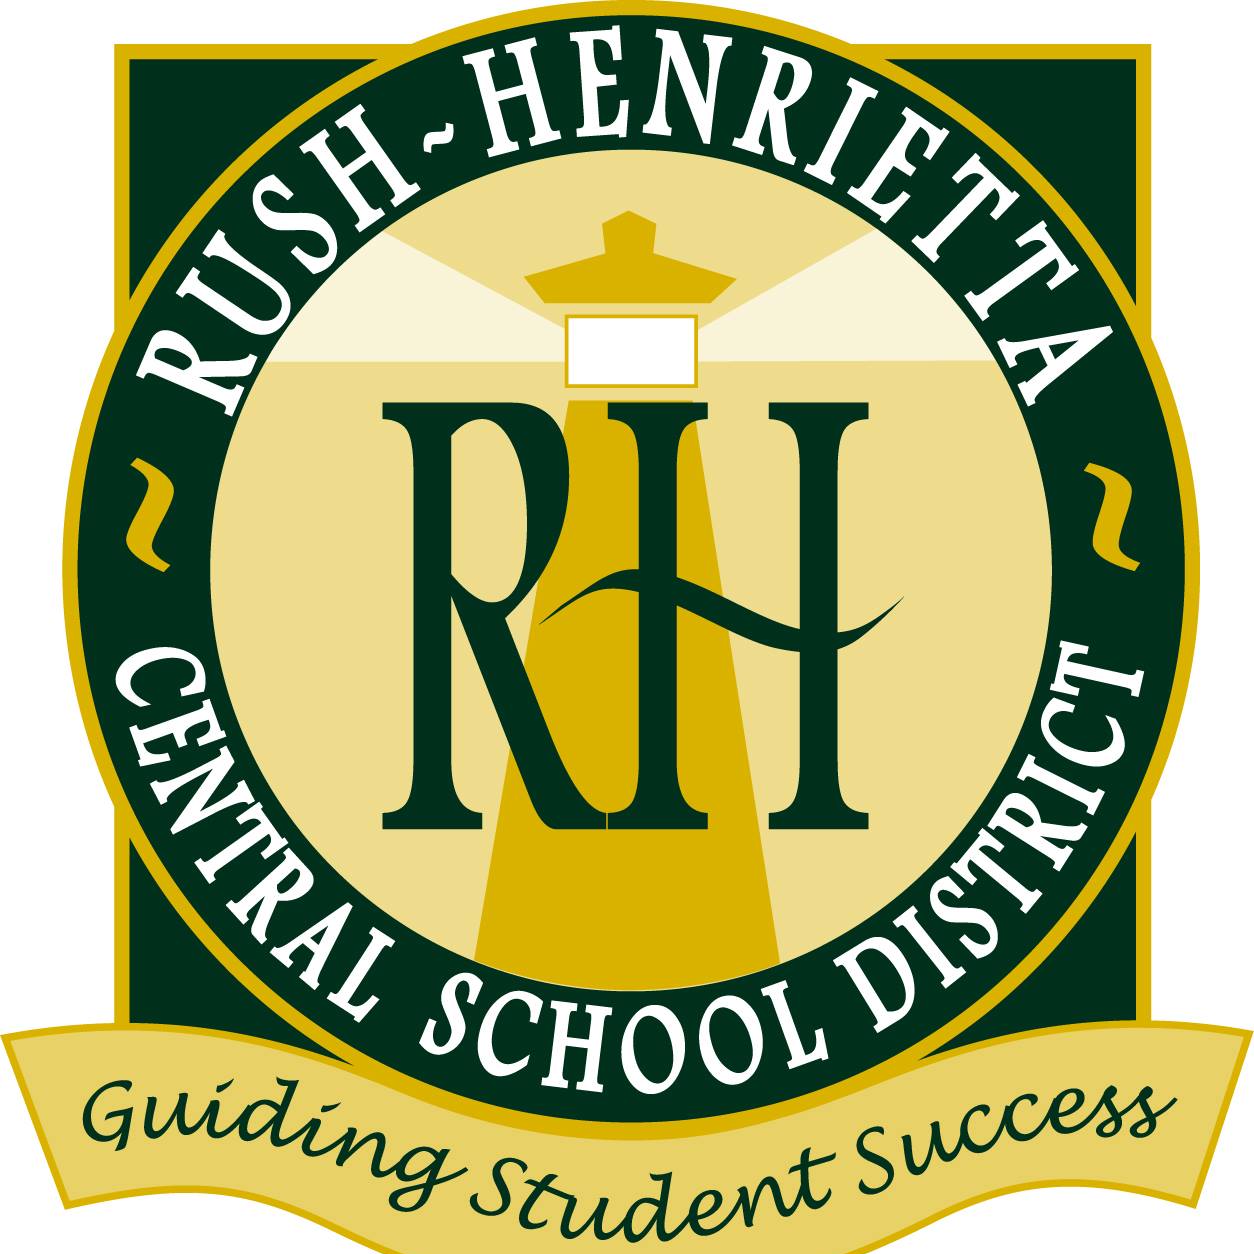 RushHenrietta Central School District